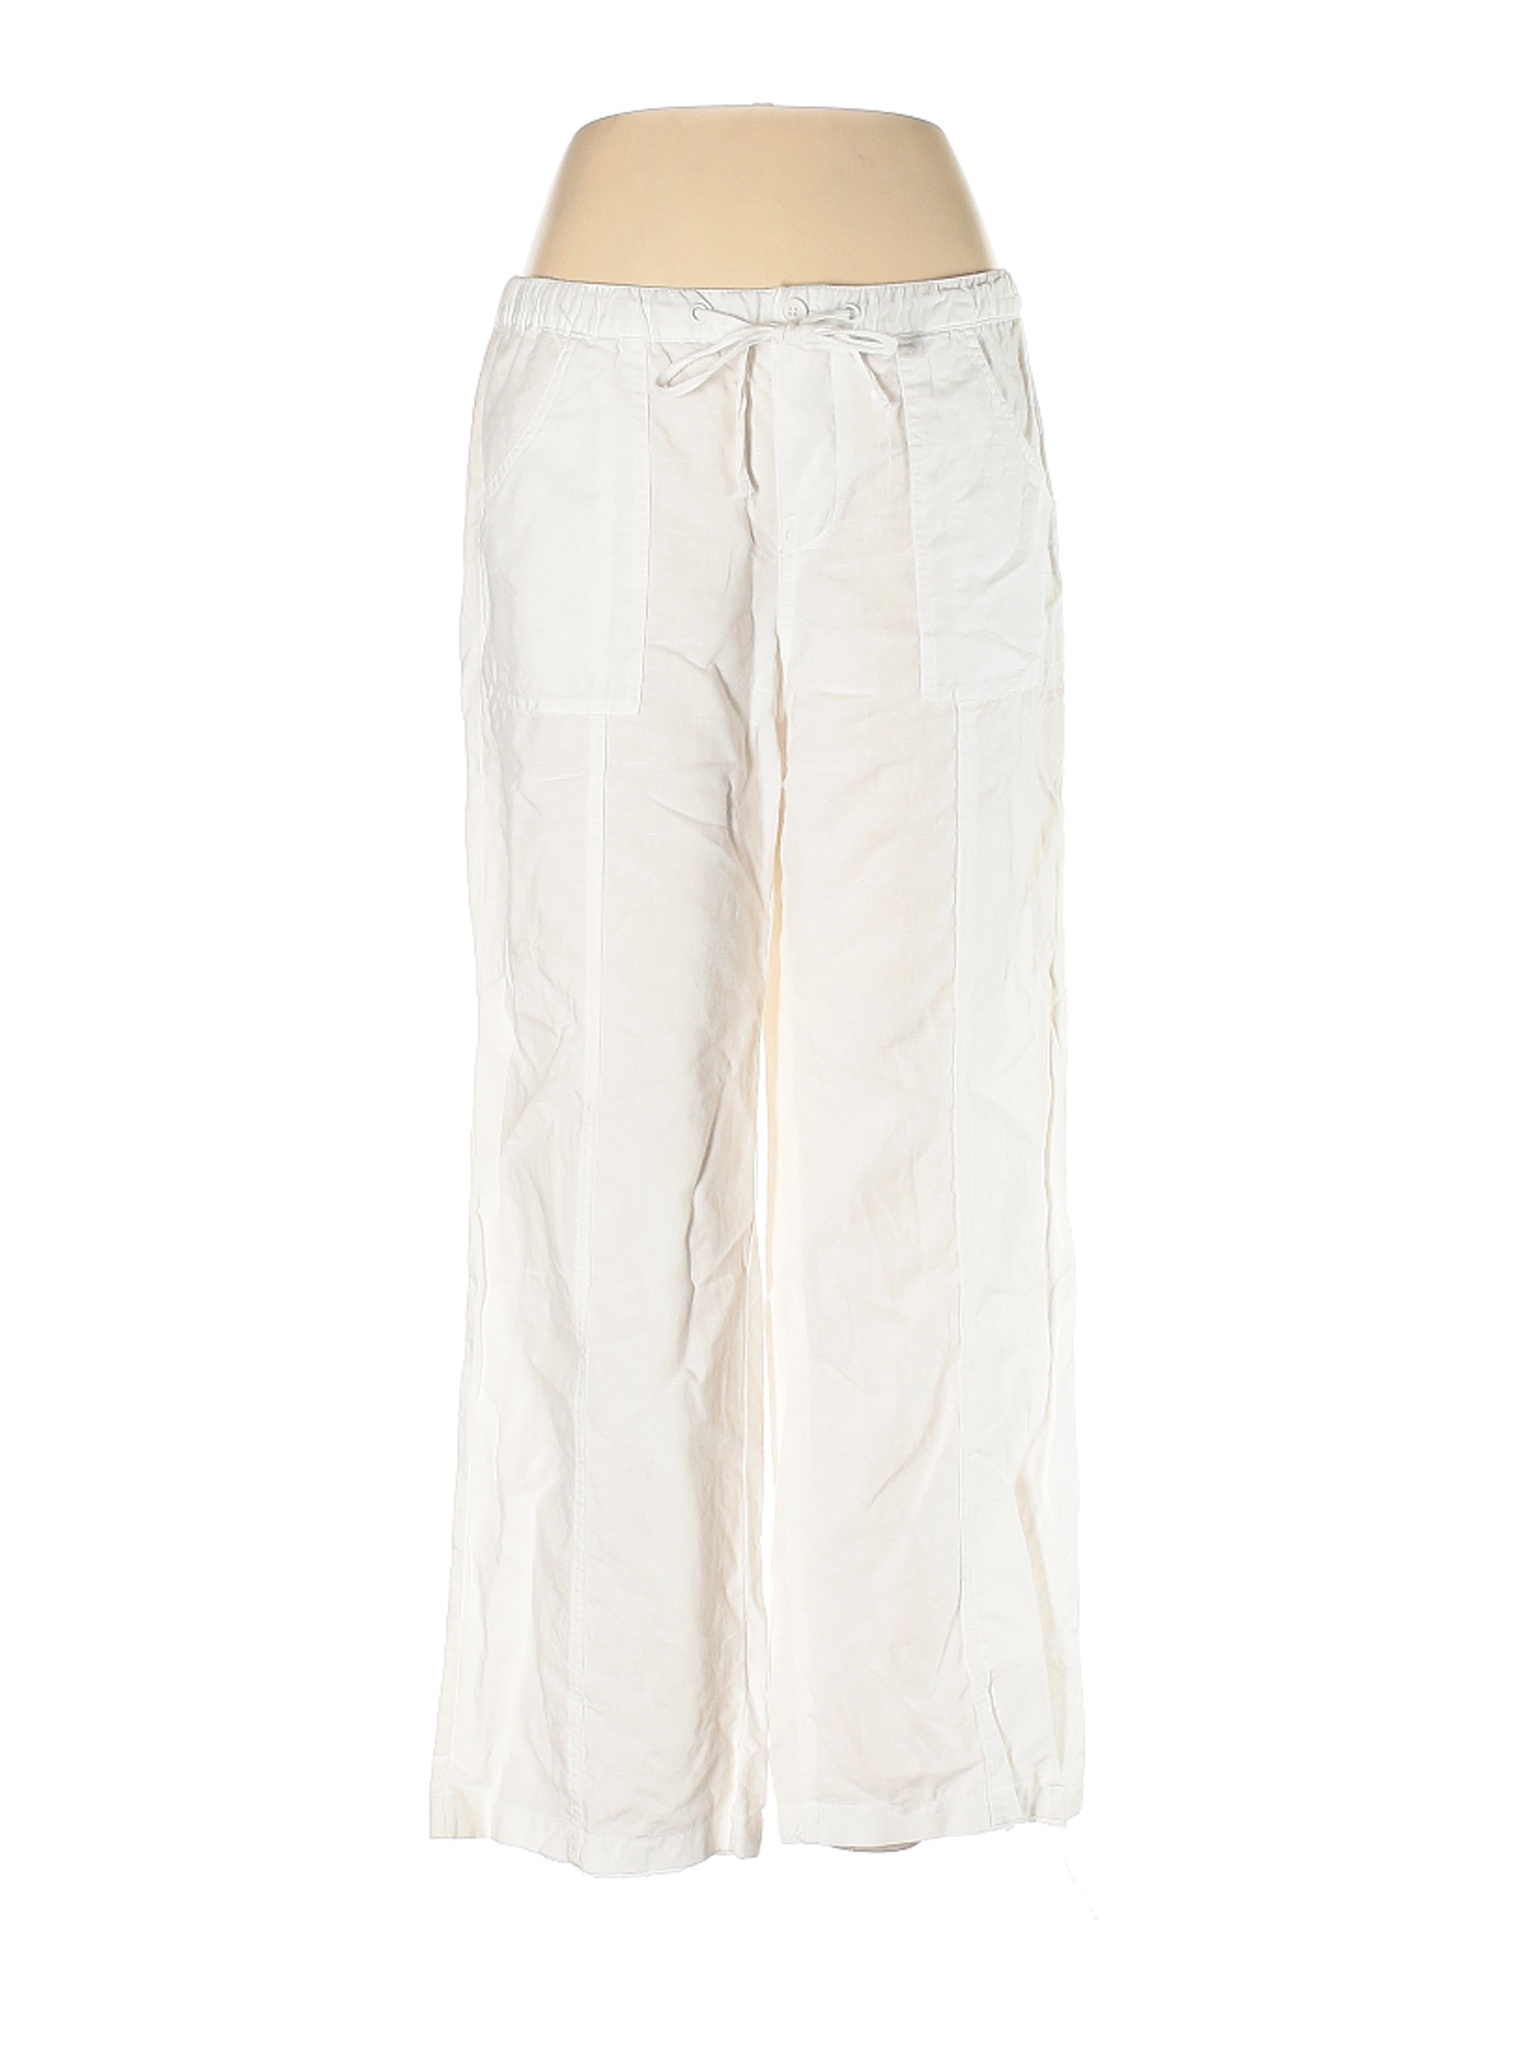 New York & Company Women White Linen Pants M | eBay